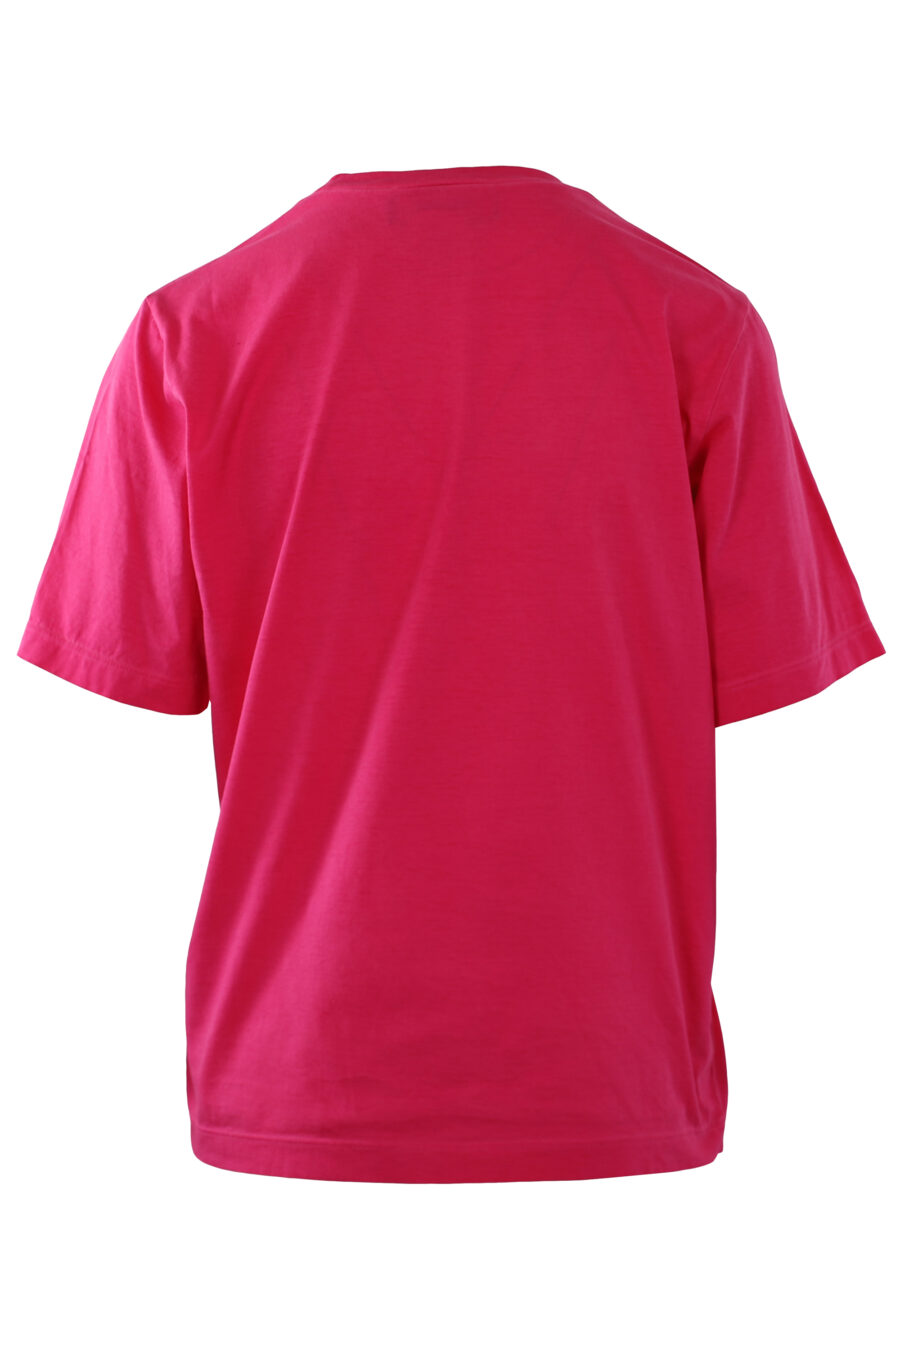 Fuchsiafarbenes T-Shirt mit gelbem Logo - IMG 0241